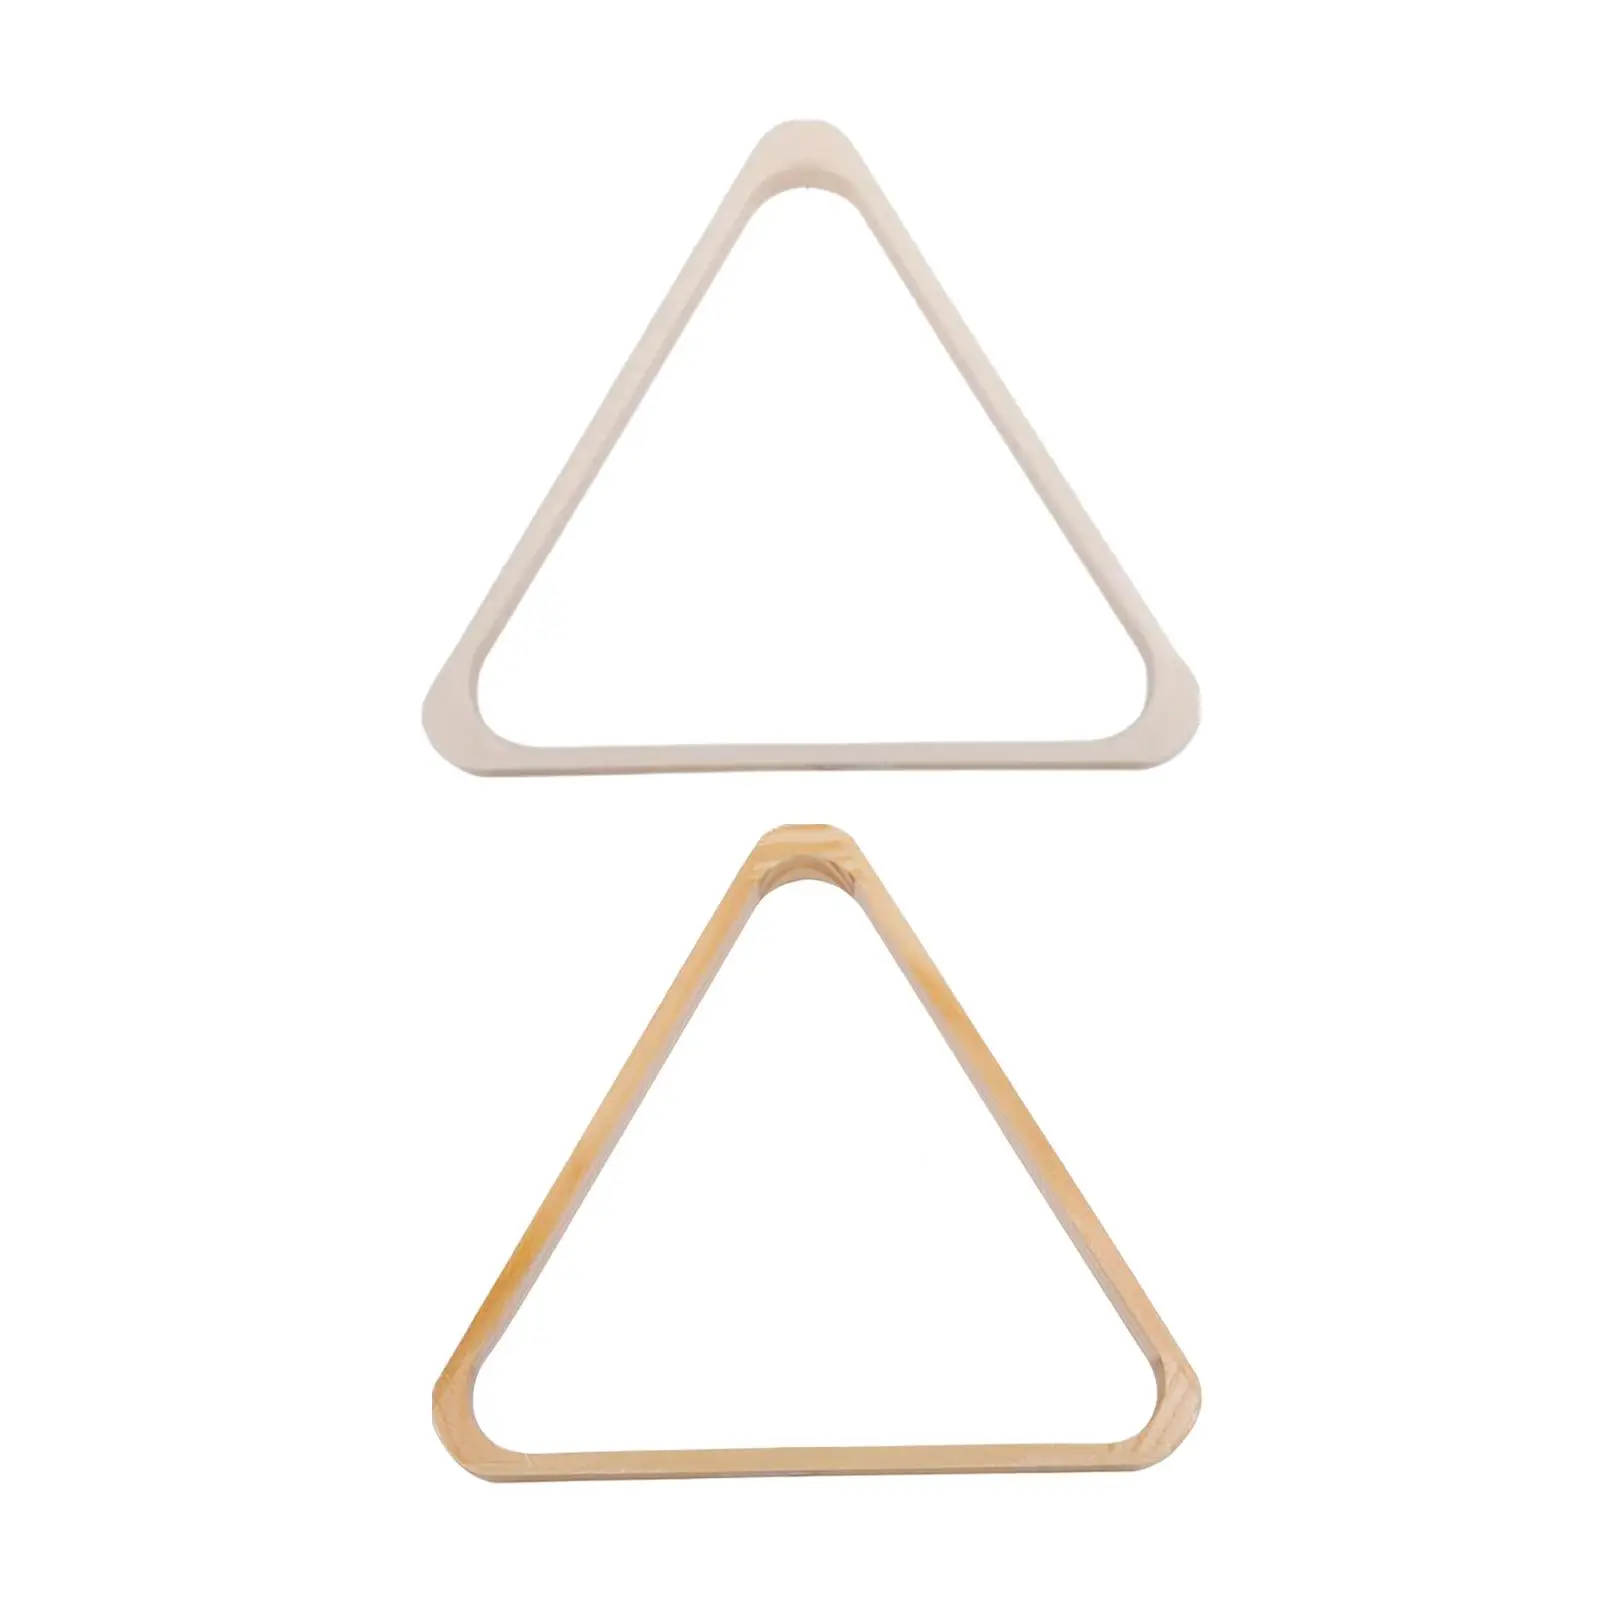 Durable Billiard Triangle Rack Diamond Rack Accessories Positioning 9 balls